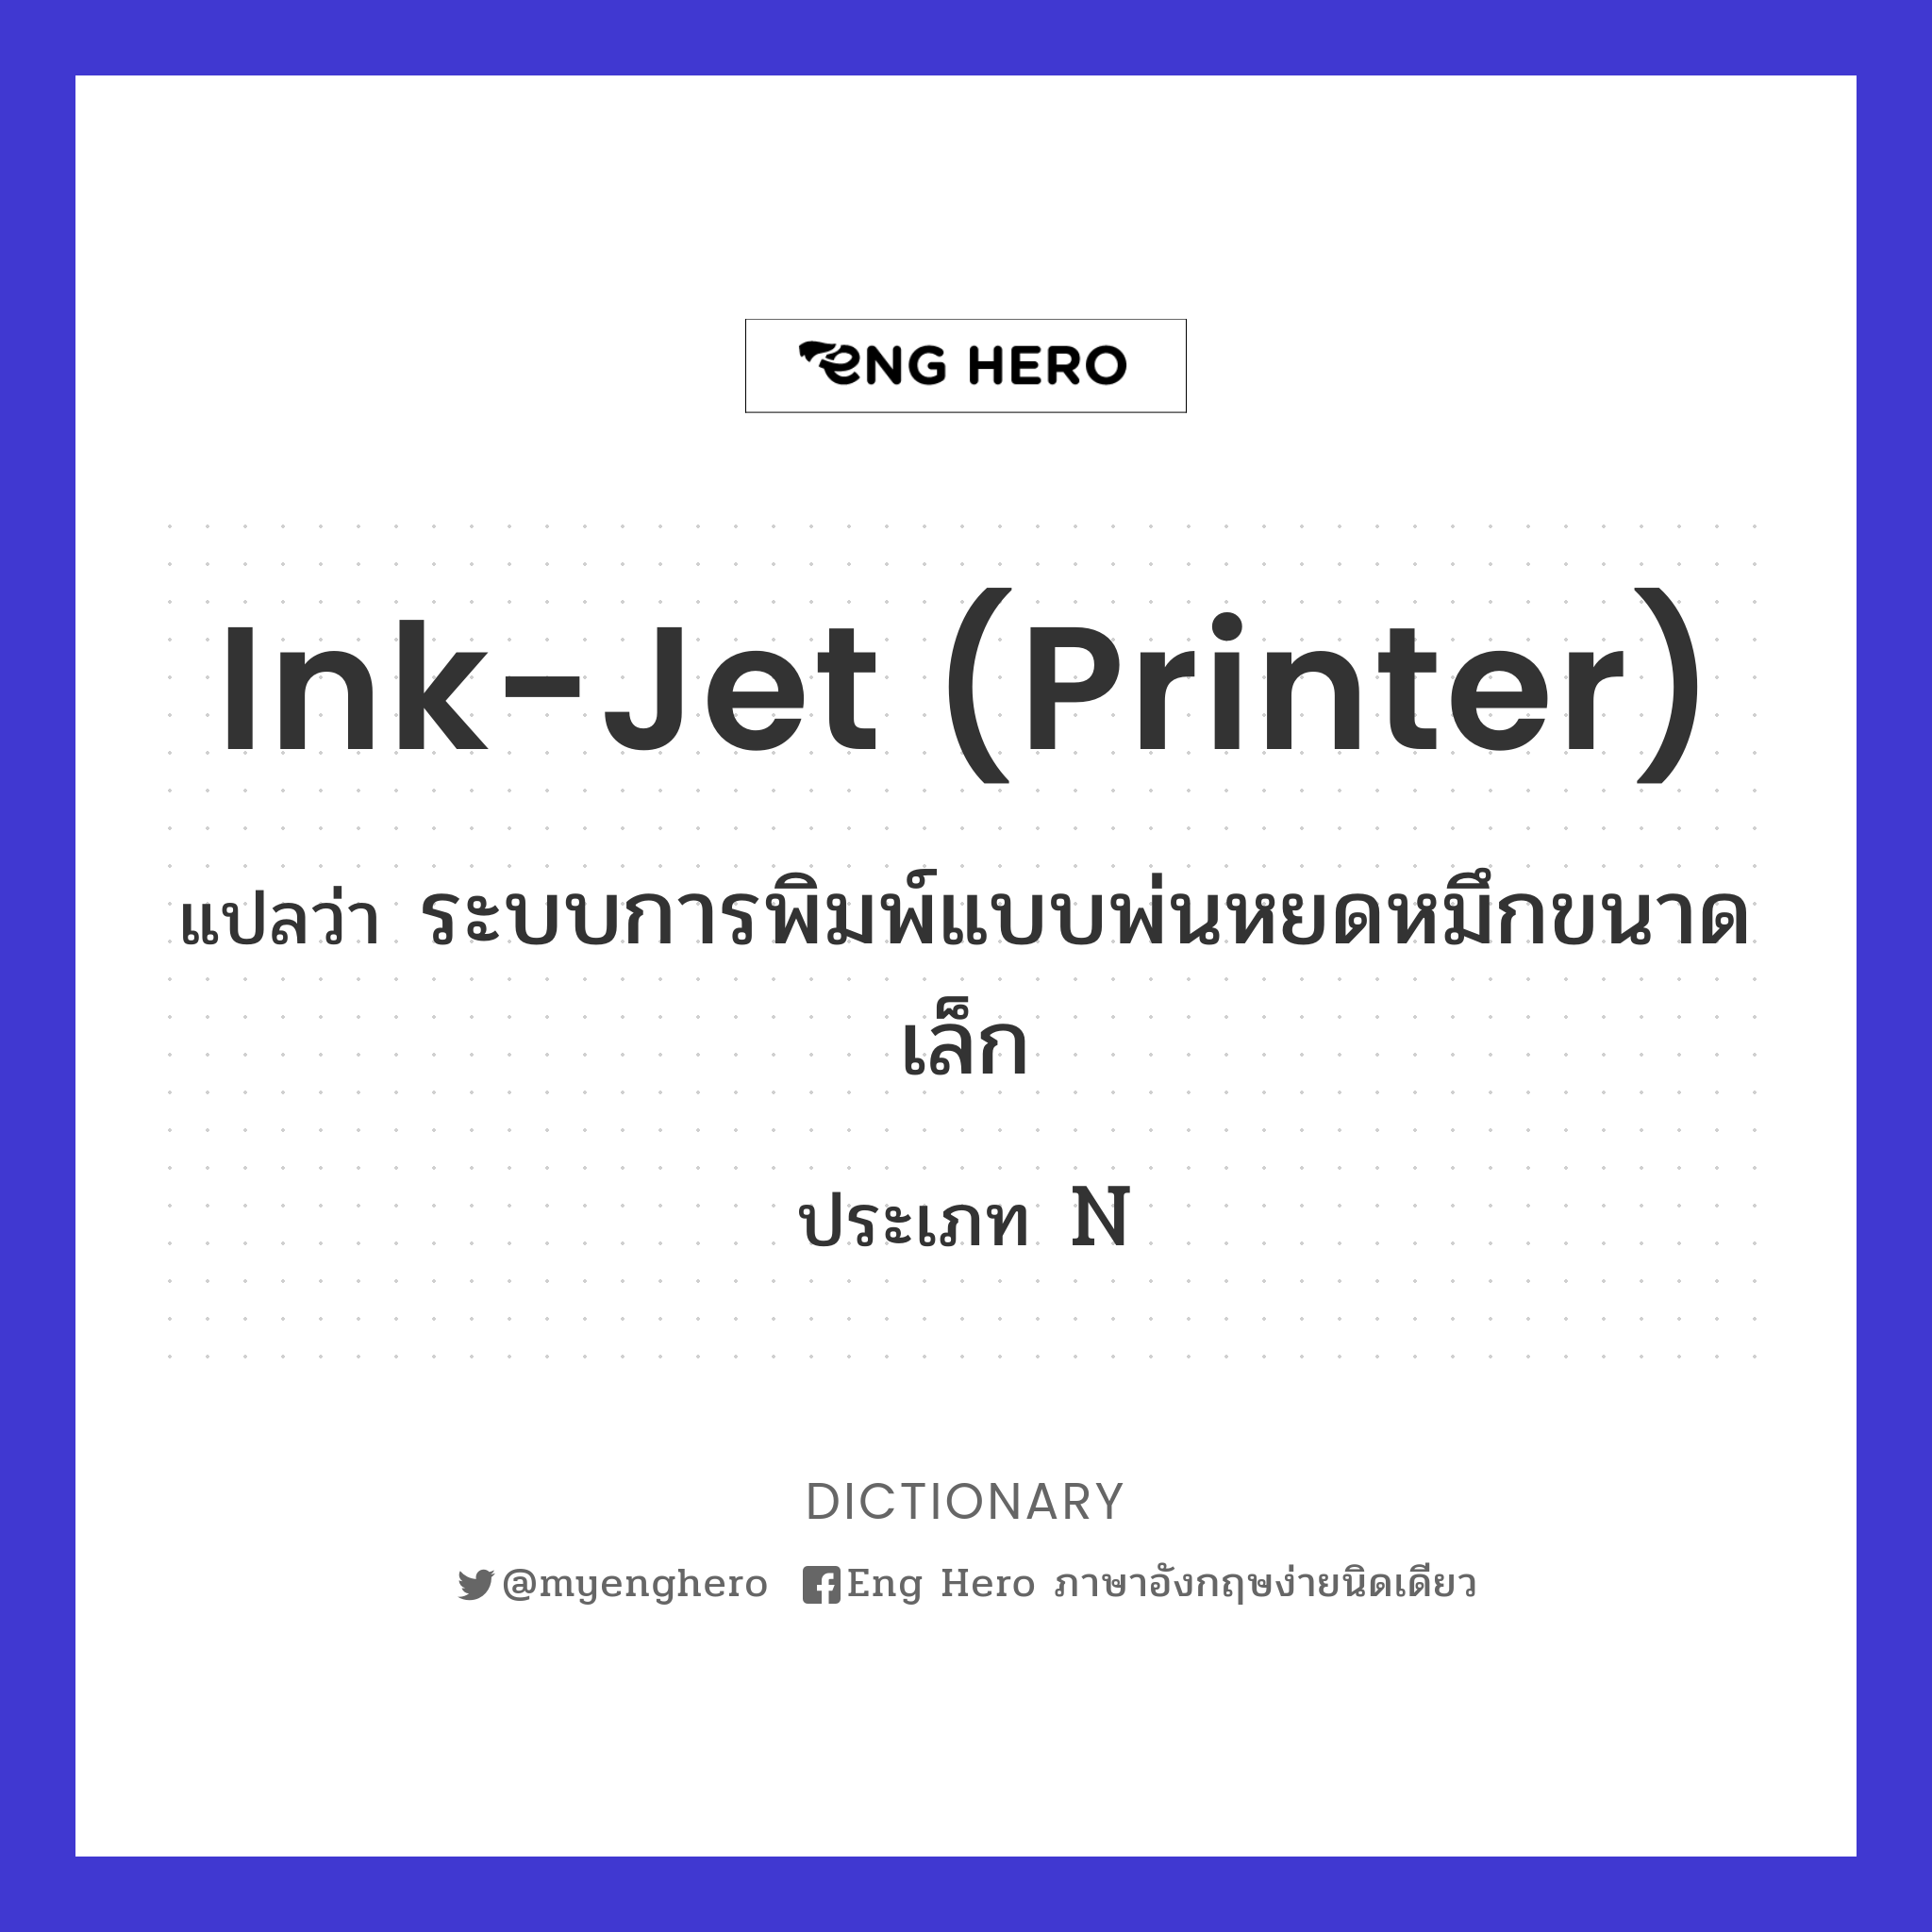 ink-jet (printer)